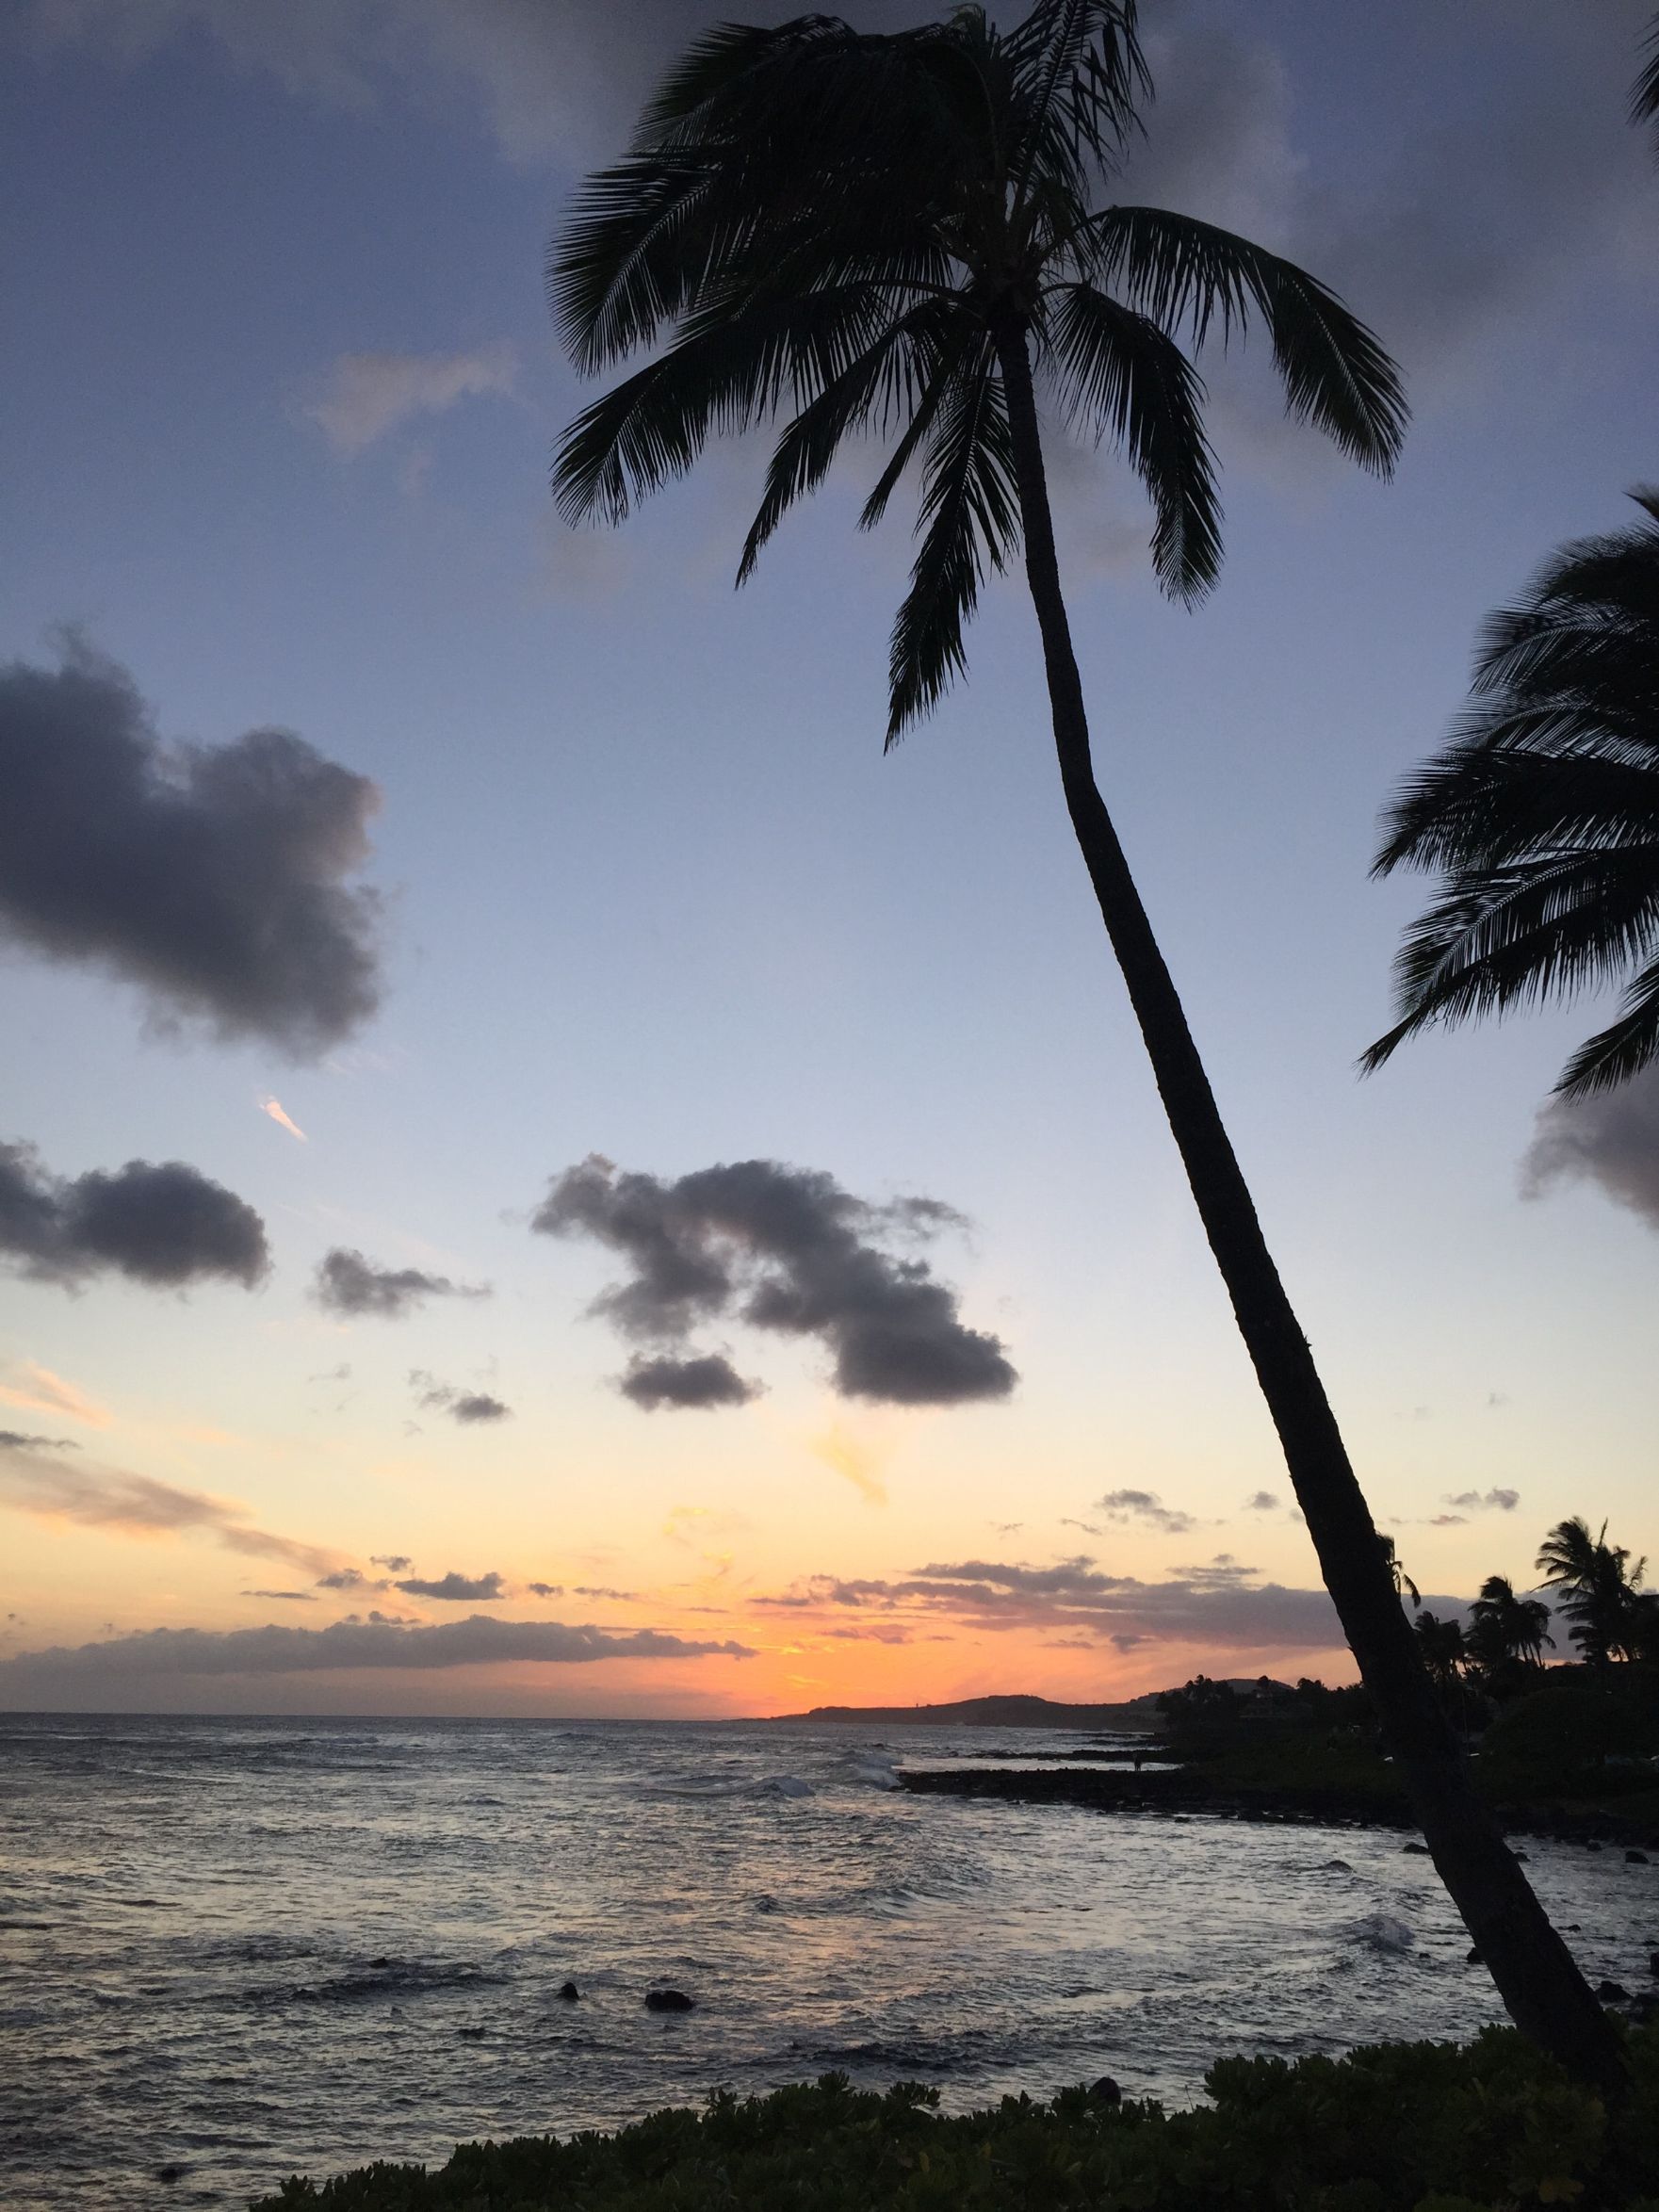 Plan a 2021 Trip to Hawaii’s Big Island